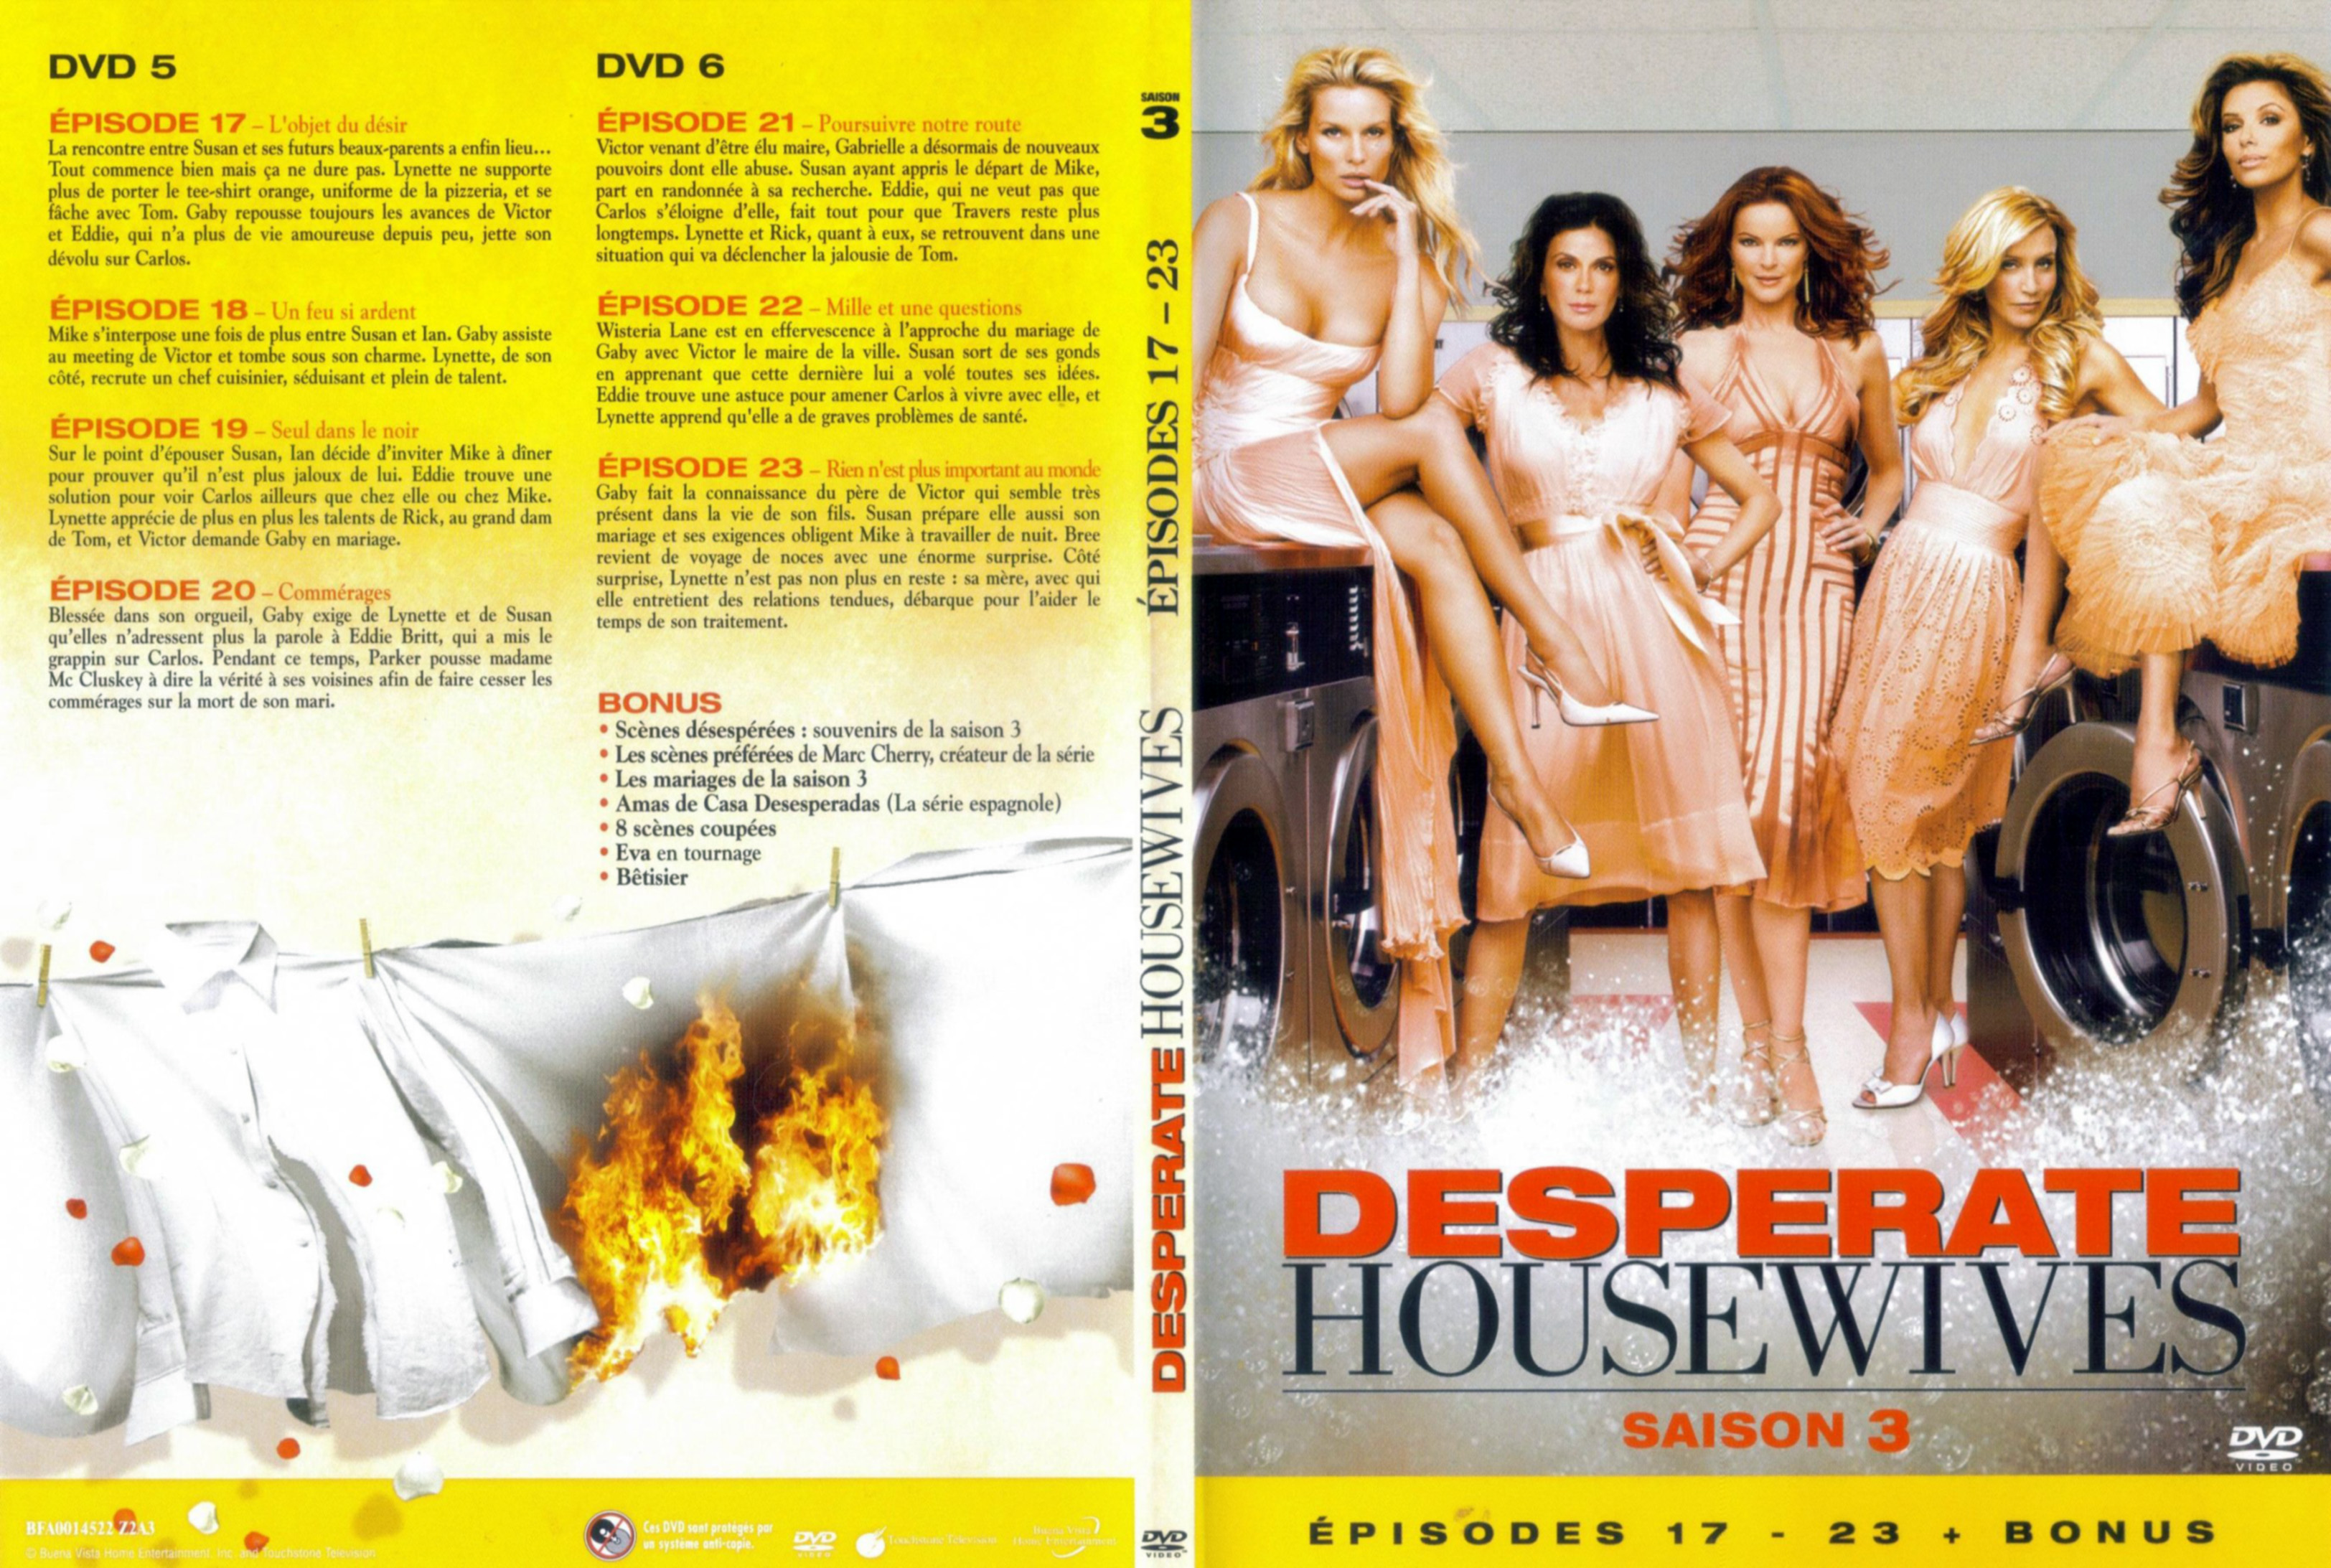 Jaquette DVD Desperate housewives Saison 3 DVD 3